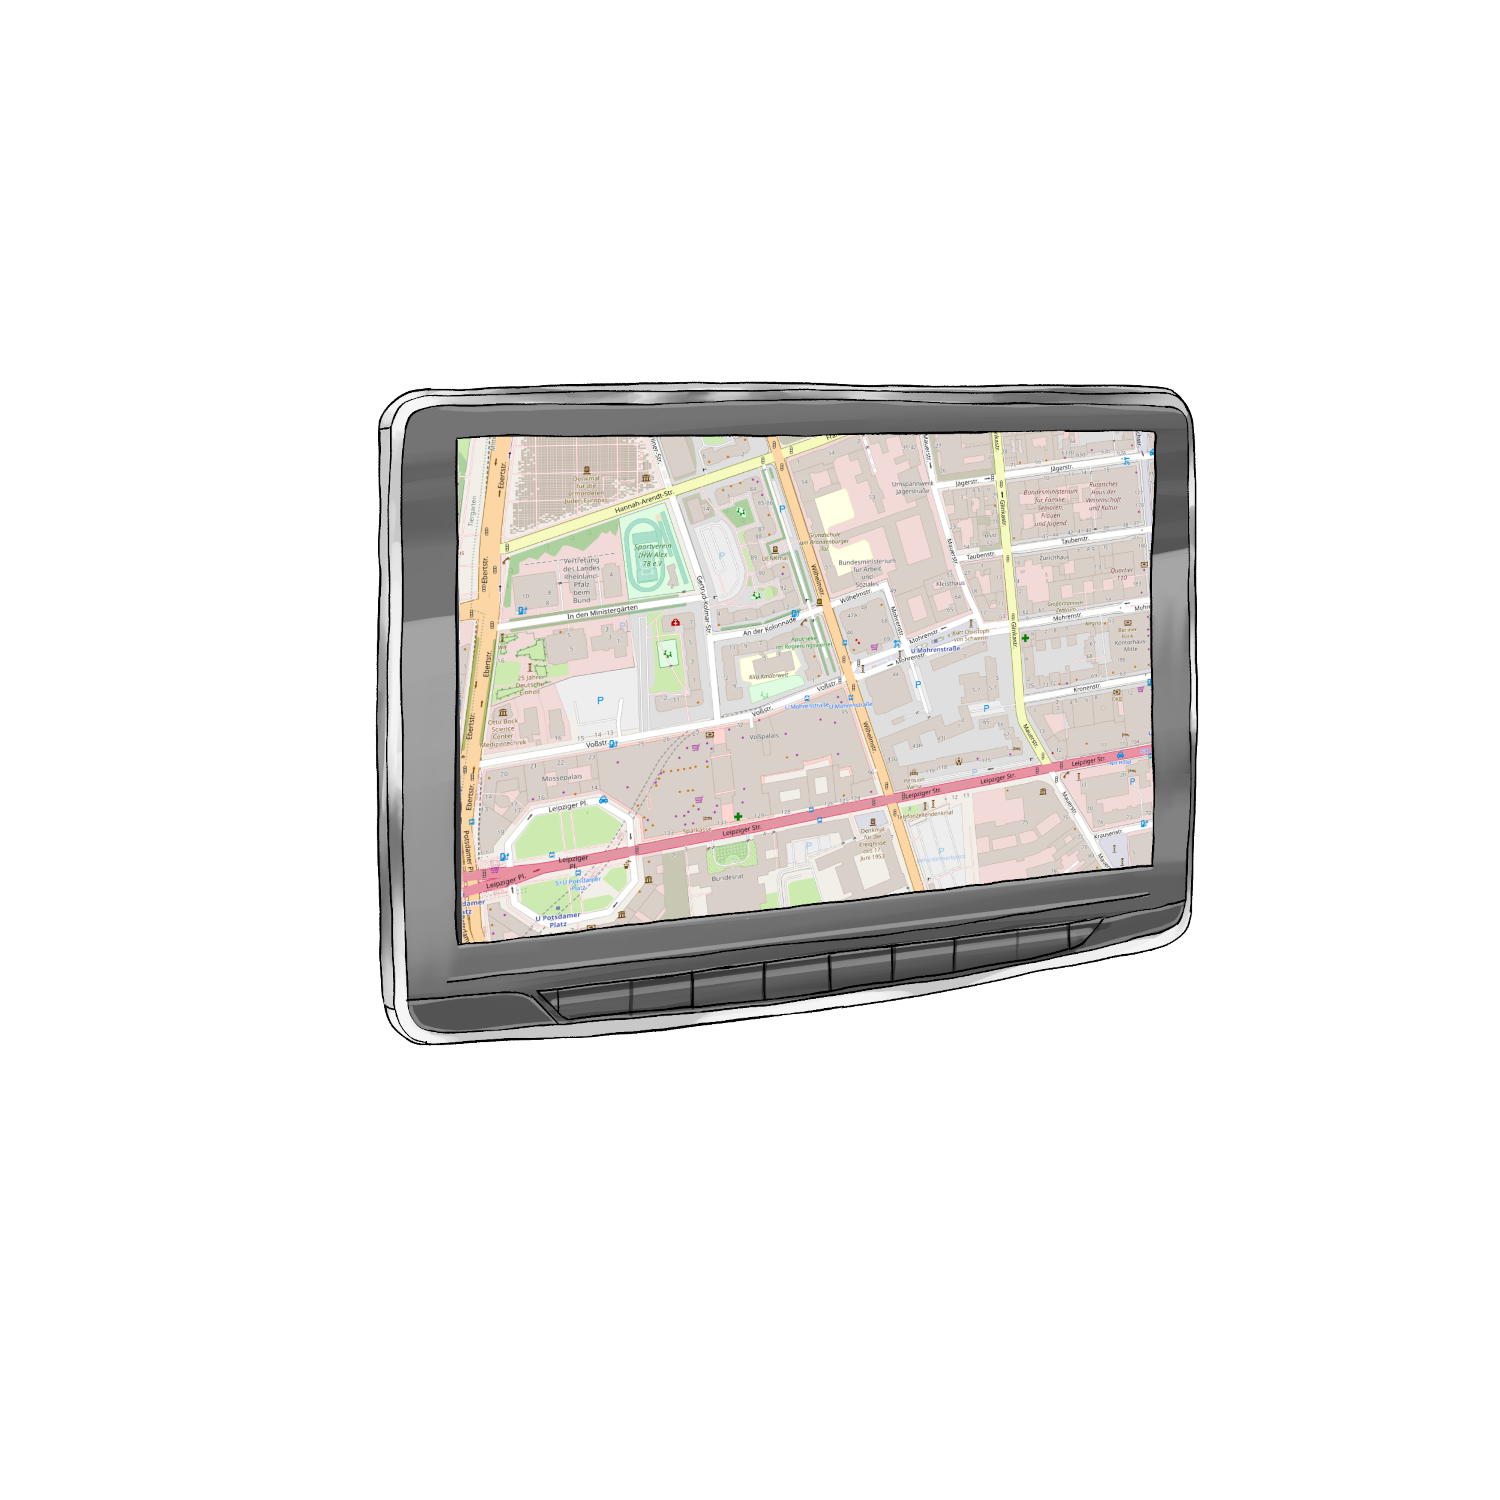  Artikelbild 1 des Artikels “GPS-Navigator Multi “